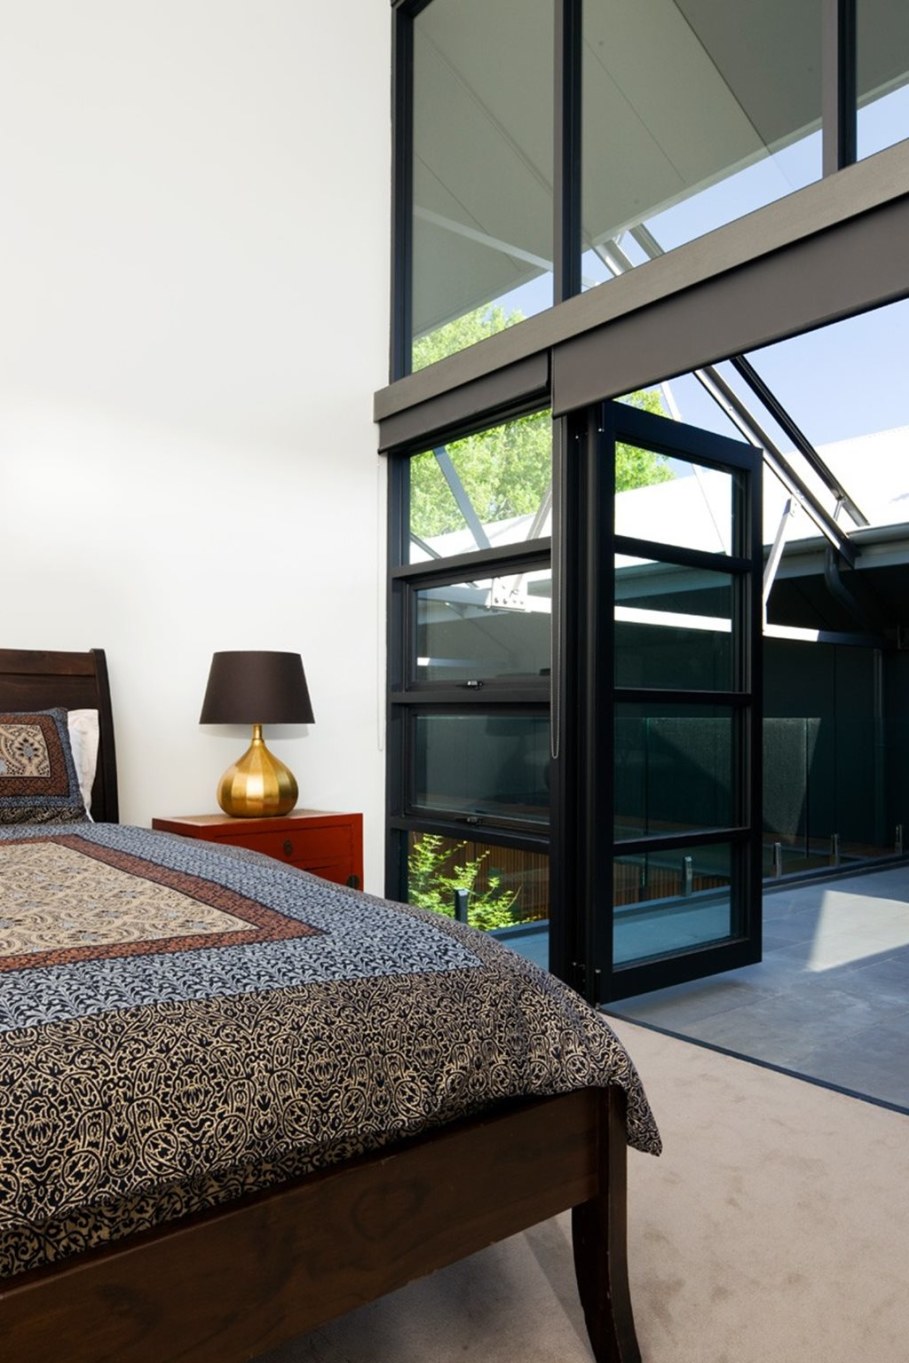 Grand loft house in Australia by Corben Architects studio - Bedroom 3